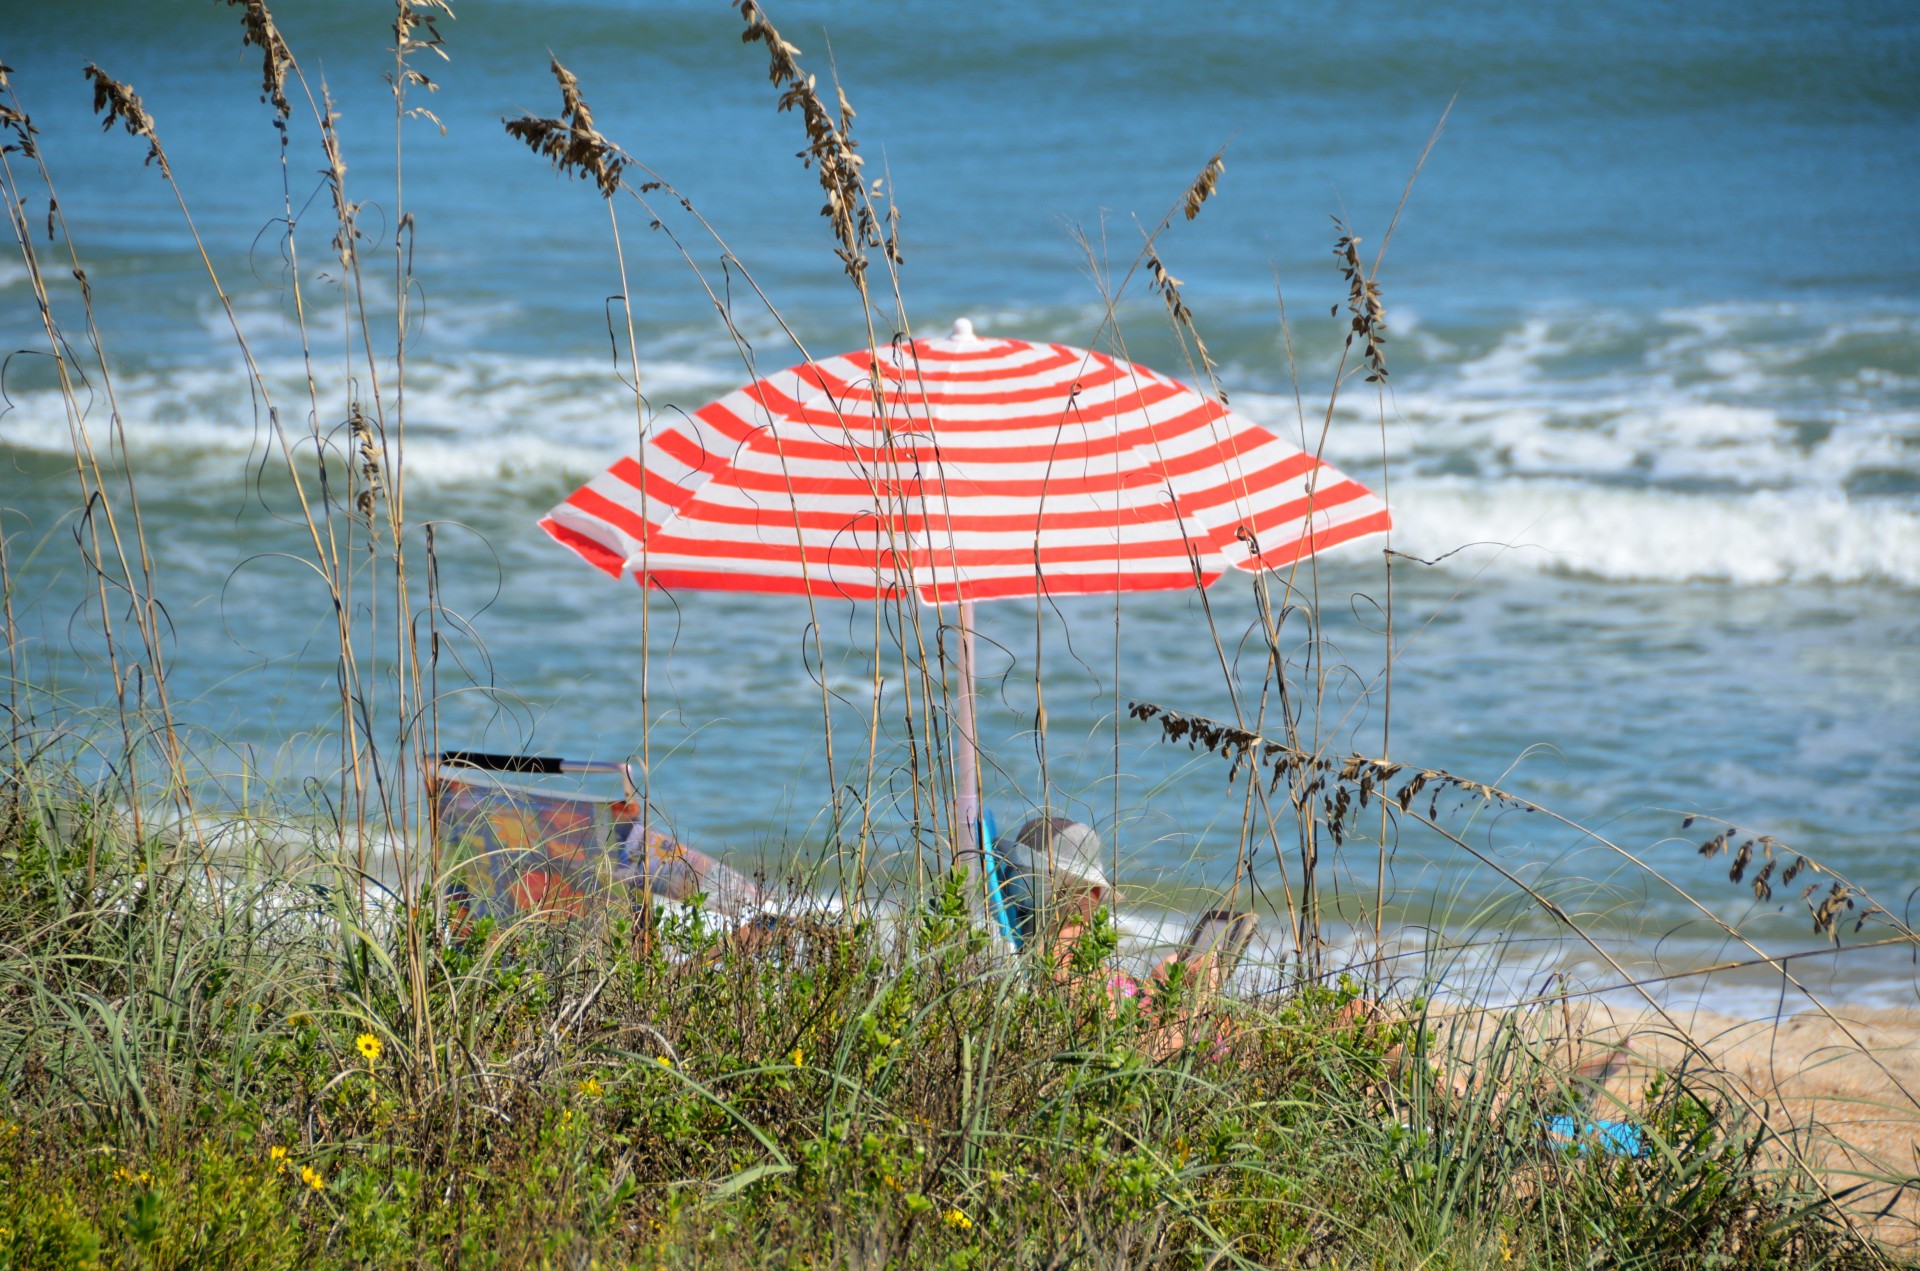 Beach umbrella on the beach at Florida, USA